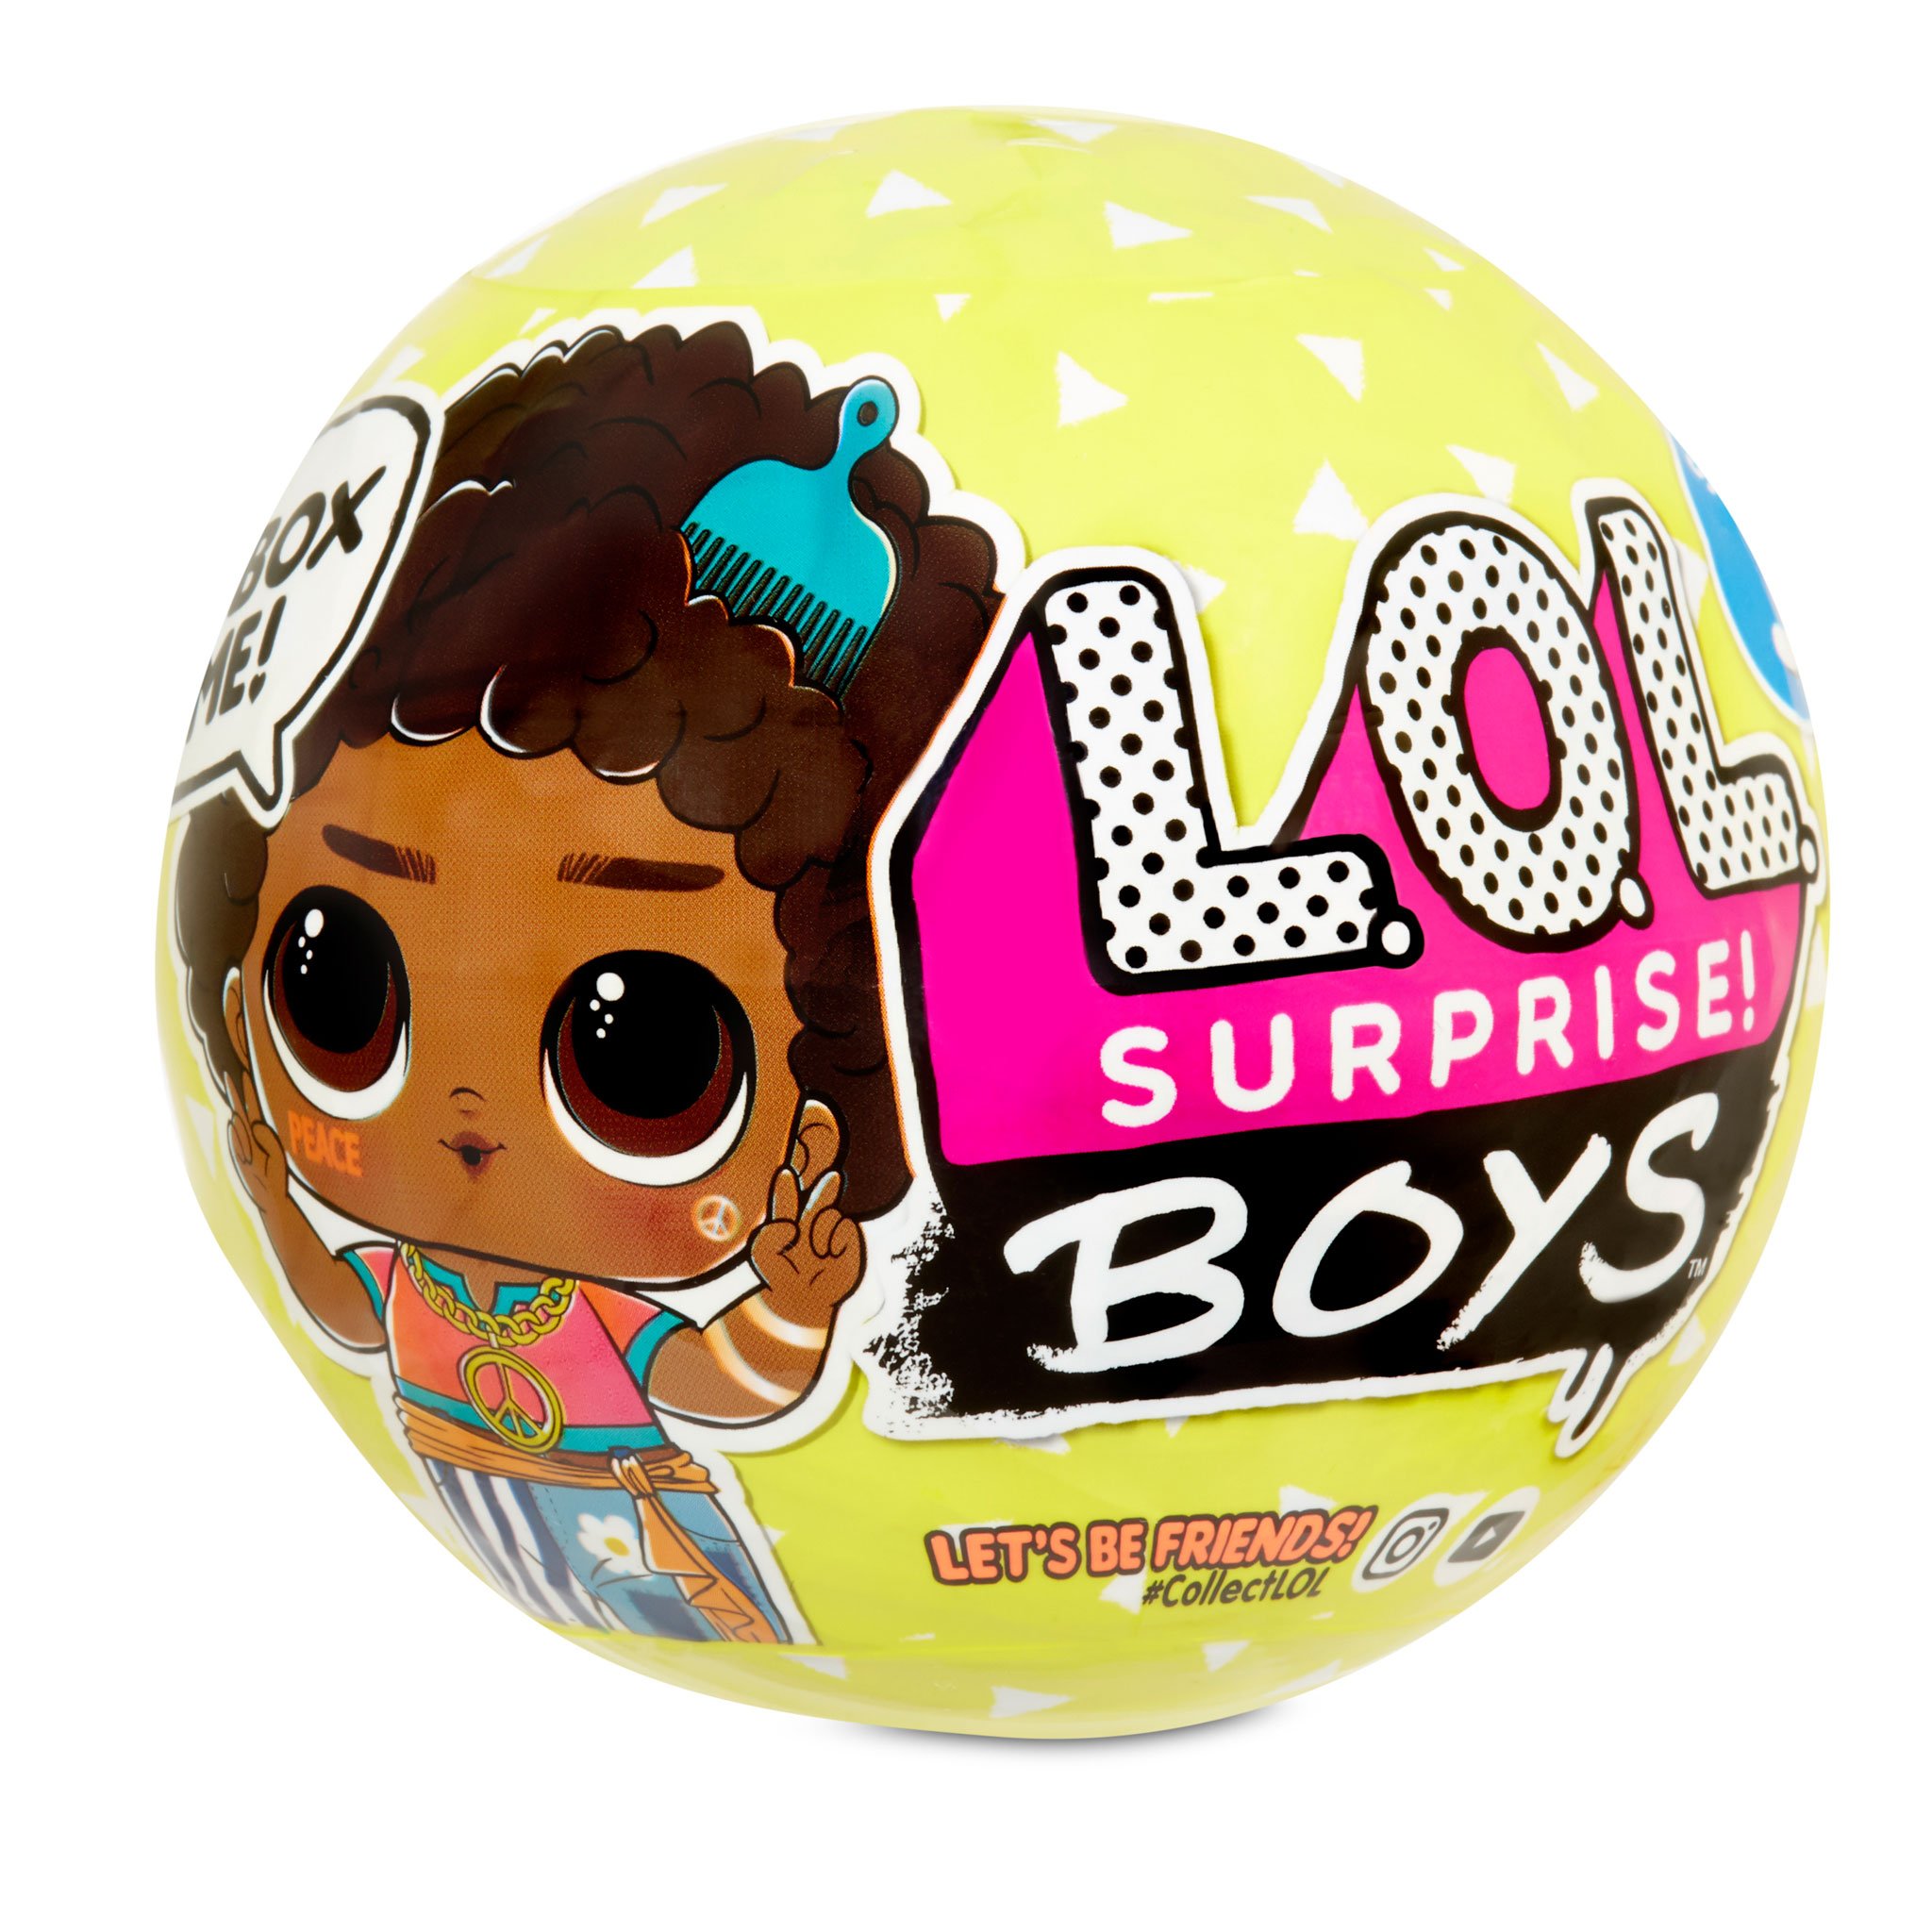 L.O.L. Surprise! Boys Series 3 Doll